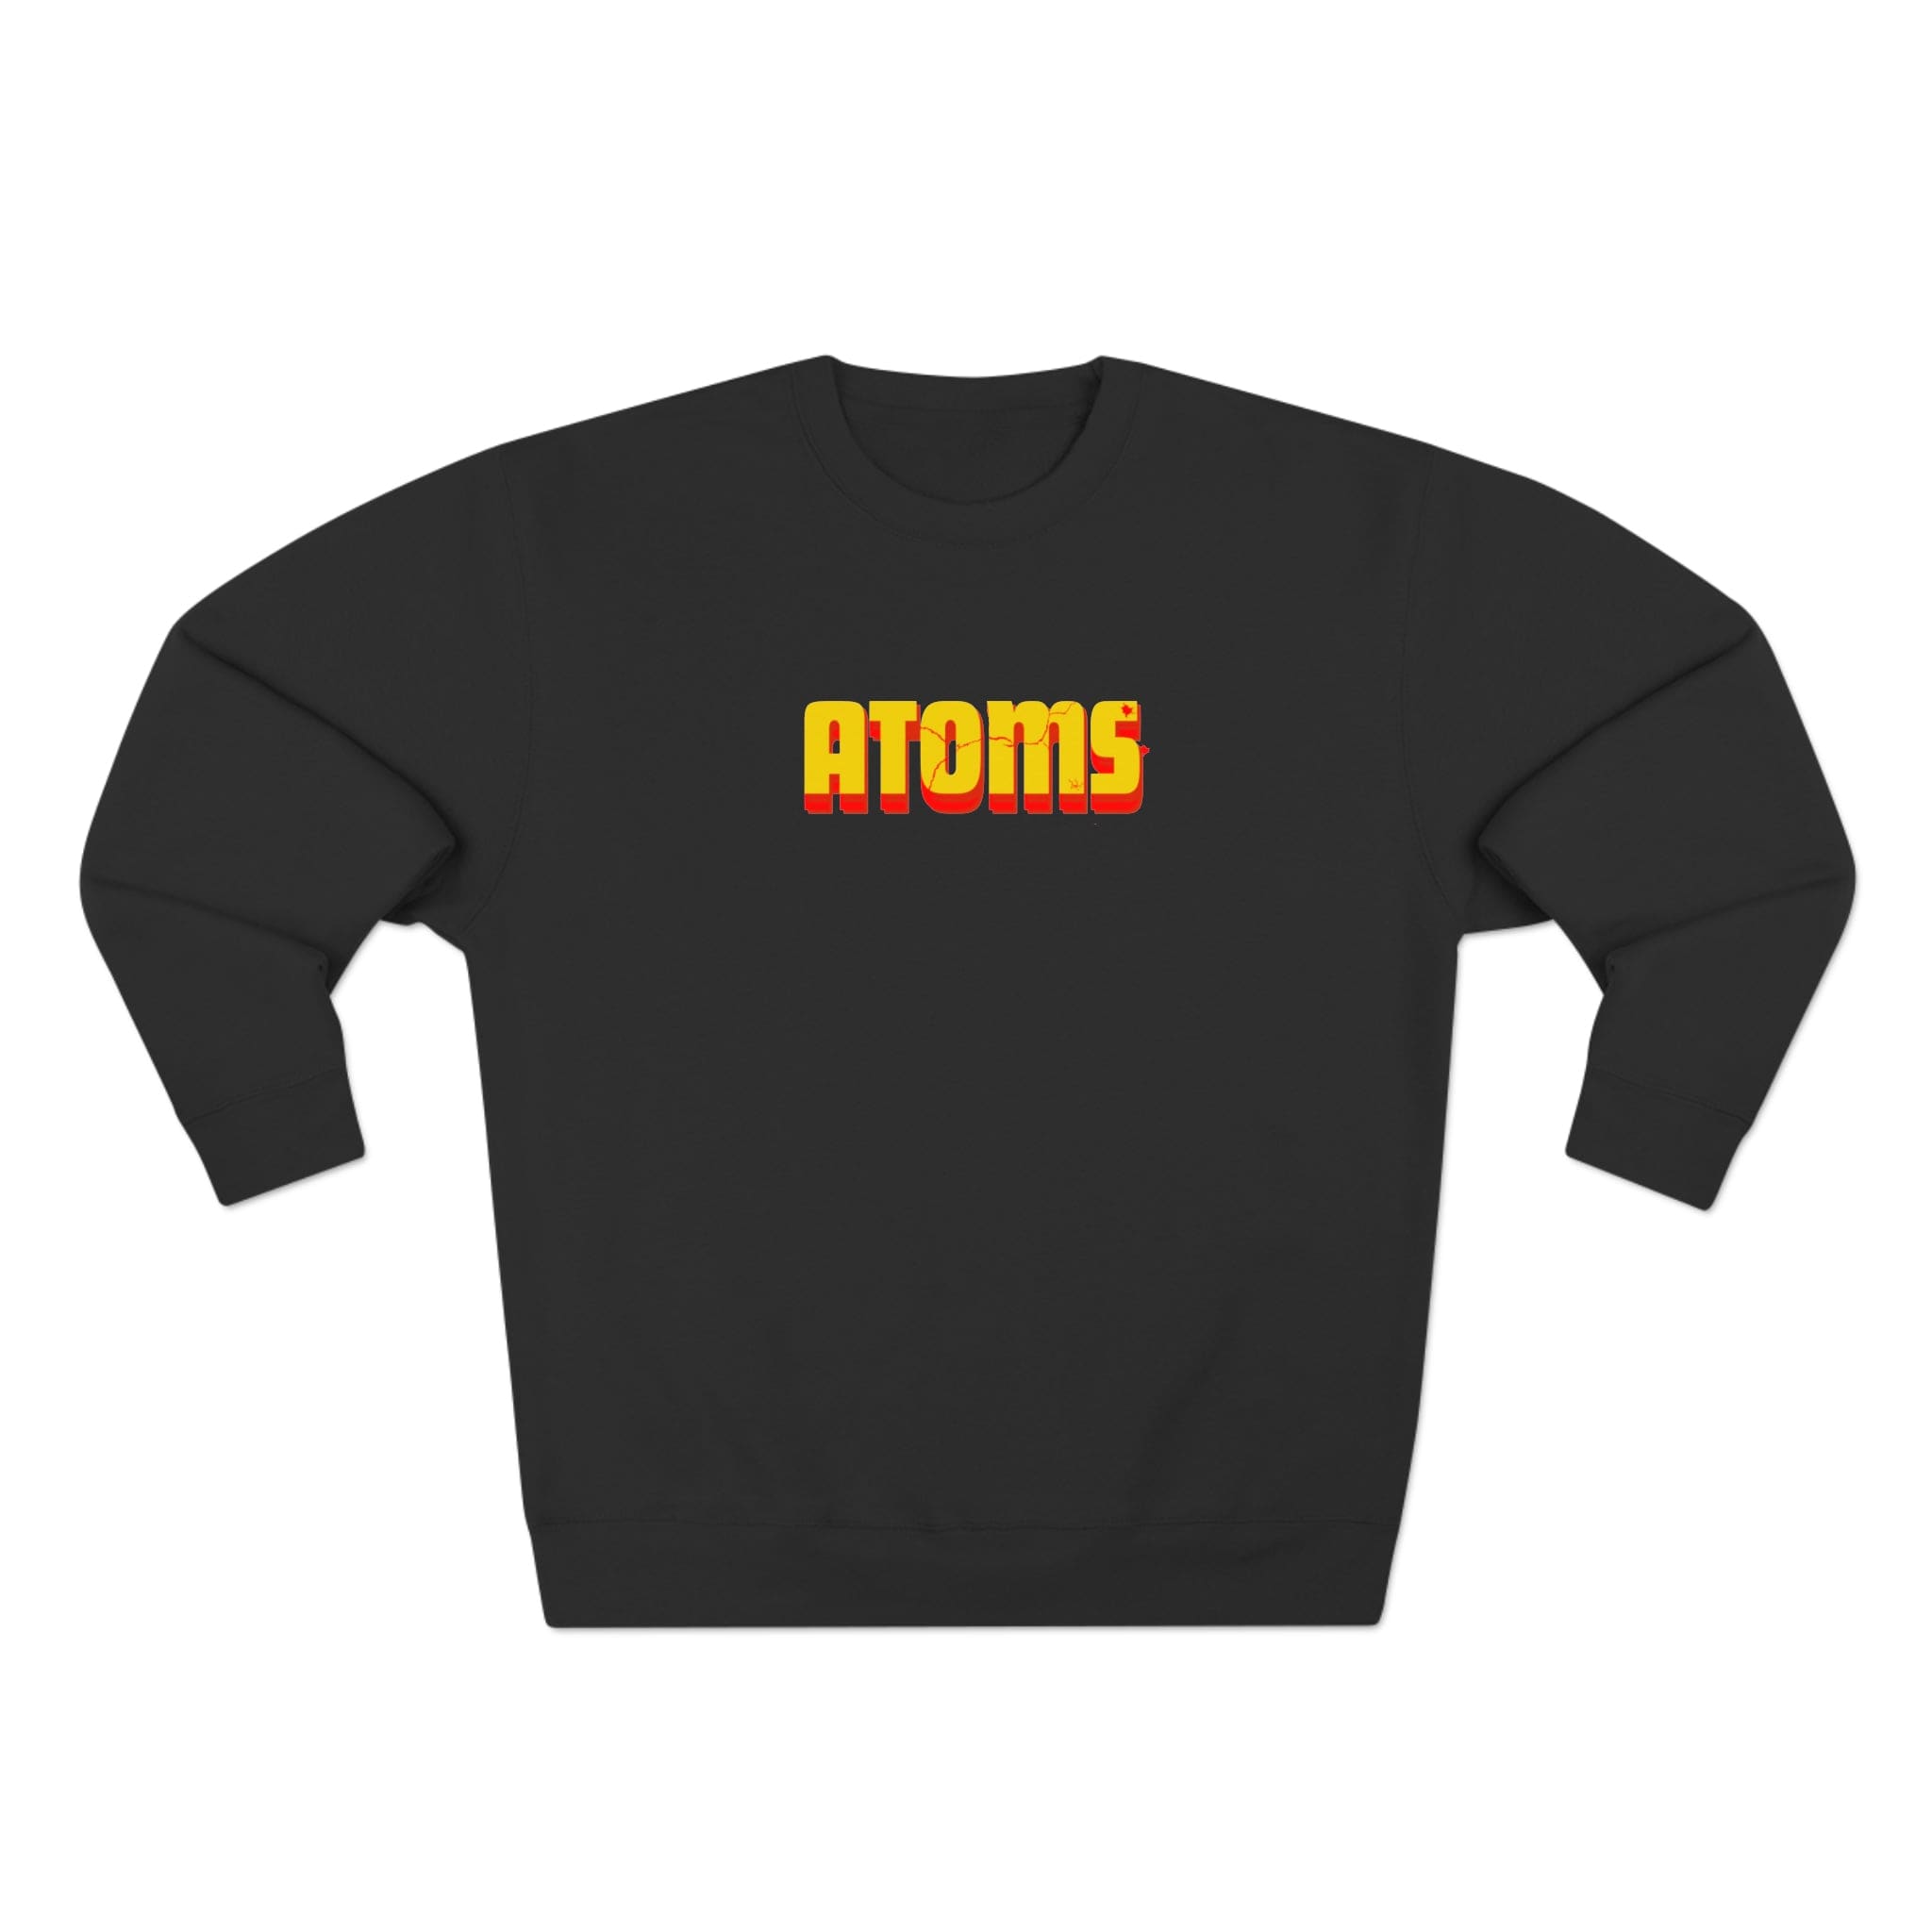 Breakin’ Atoms Clothing Brand Sweatshirt Black / S The Atoms Graphic Sweater